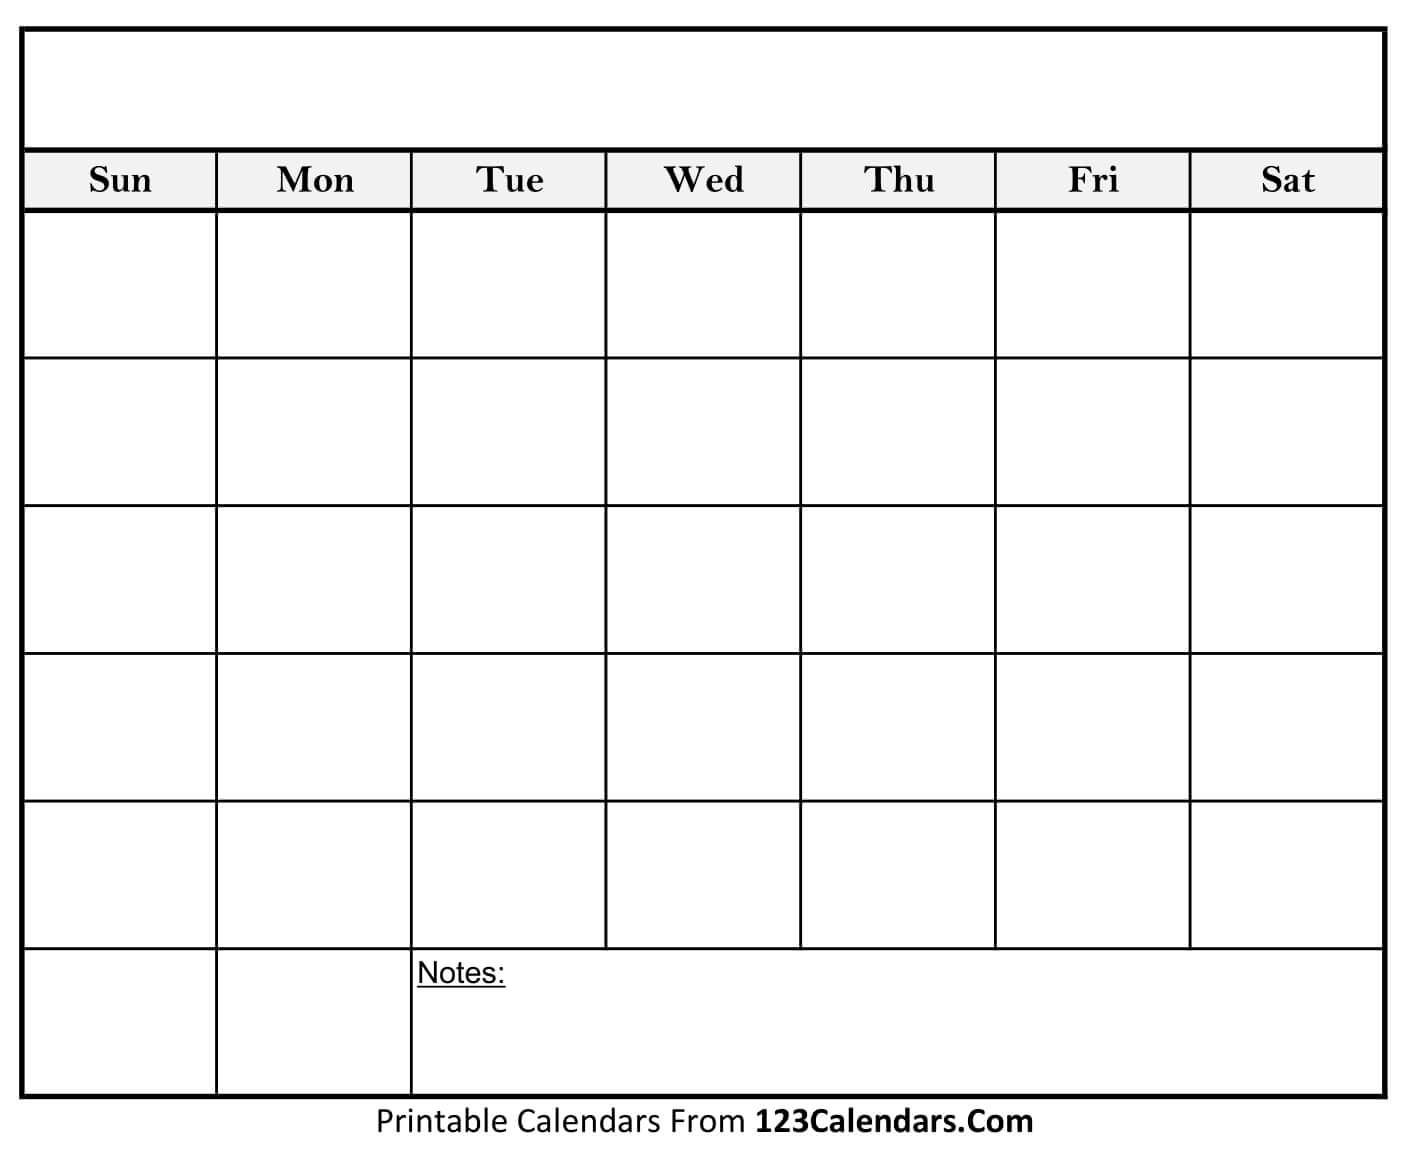 Free Printable Blank Calendar | 123Calendars Blank Calenders With No Dates